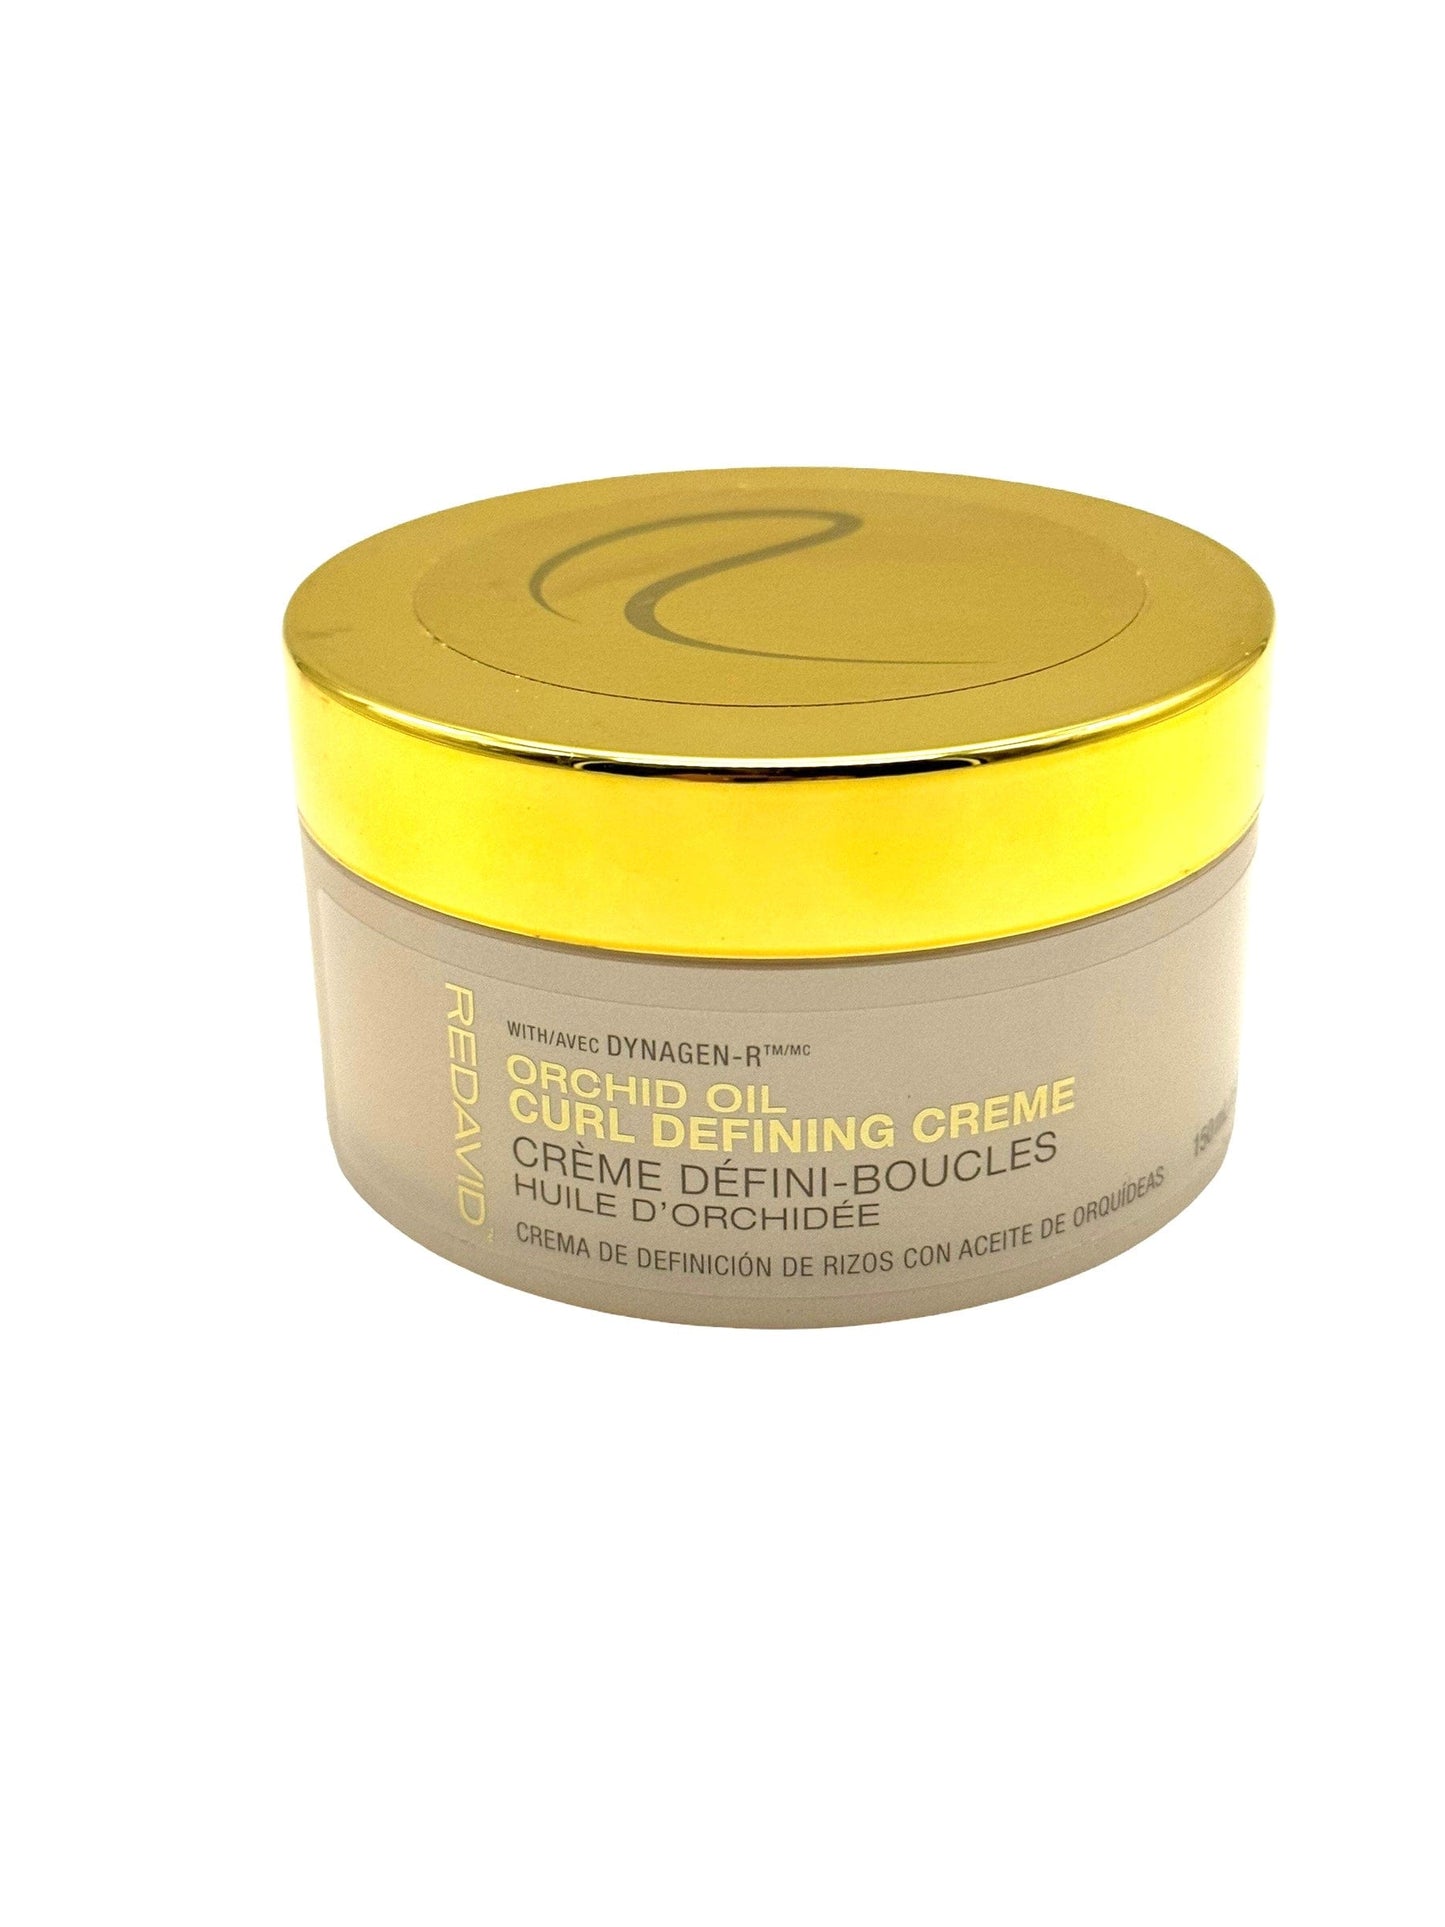 Hair Curling Cream Redavid Orchid Oil Defining Curling Creme 150ml/5oz Curling Cream